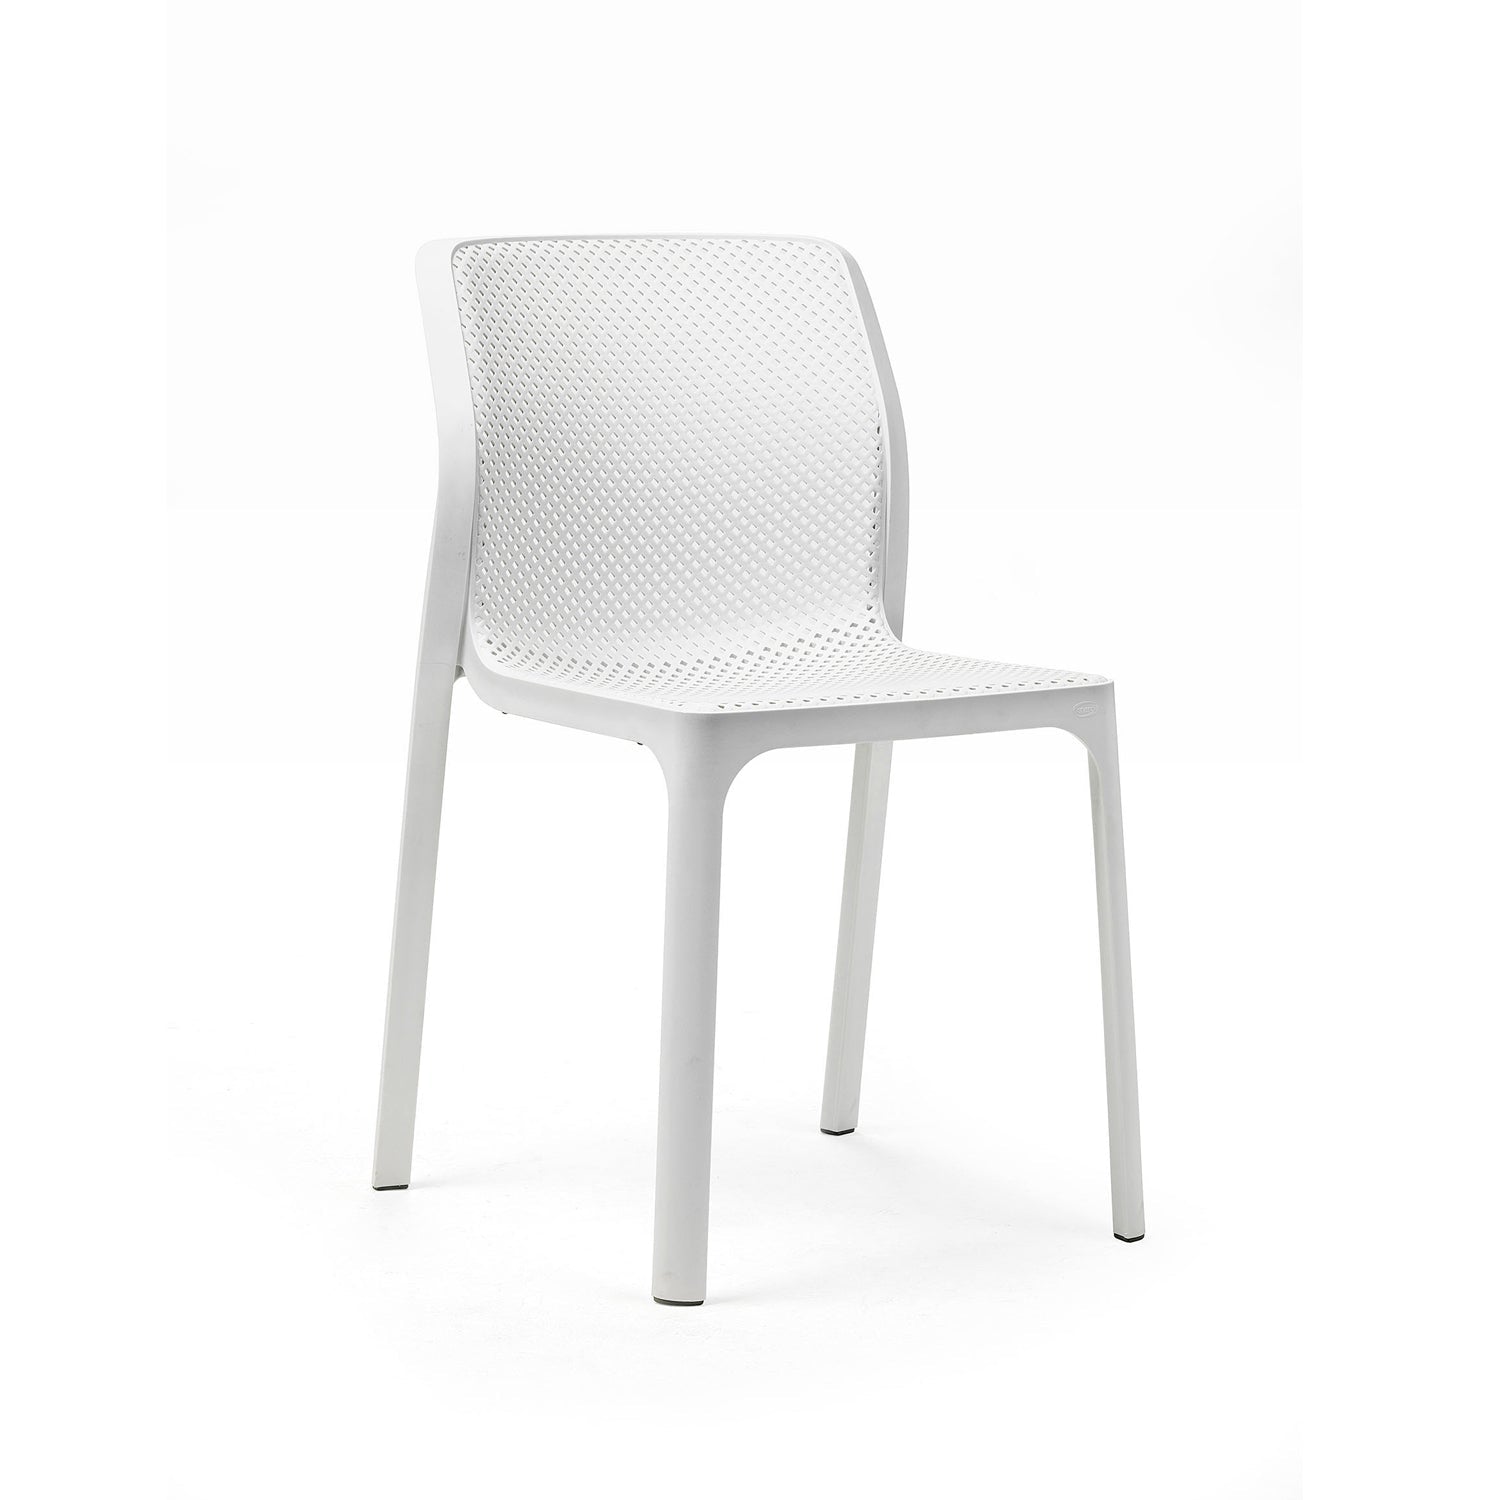 Bit Indoor/ Outdoor Chair By Nardi In White